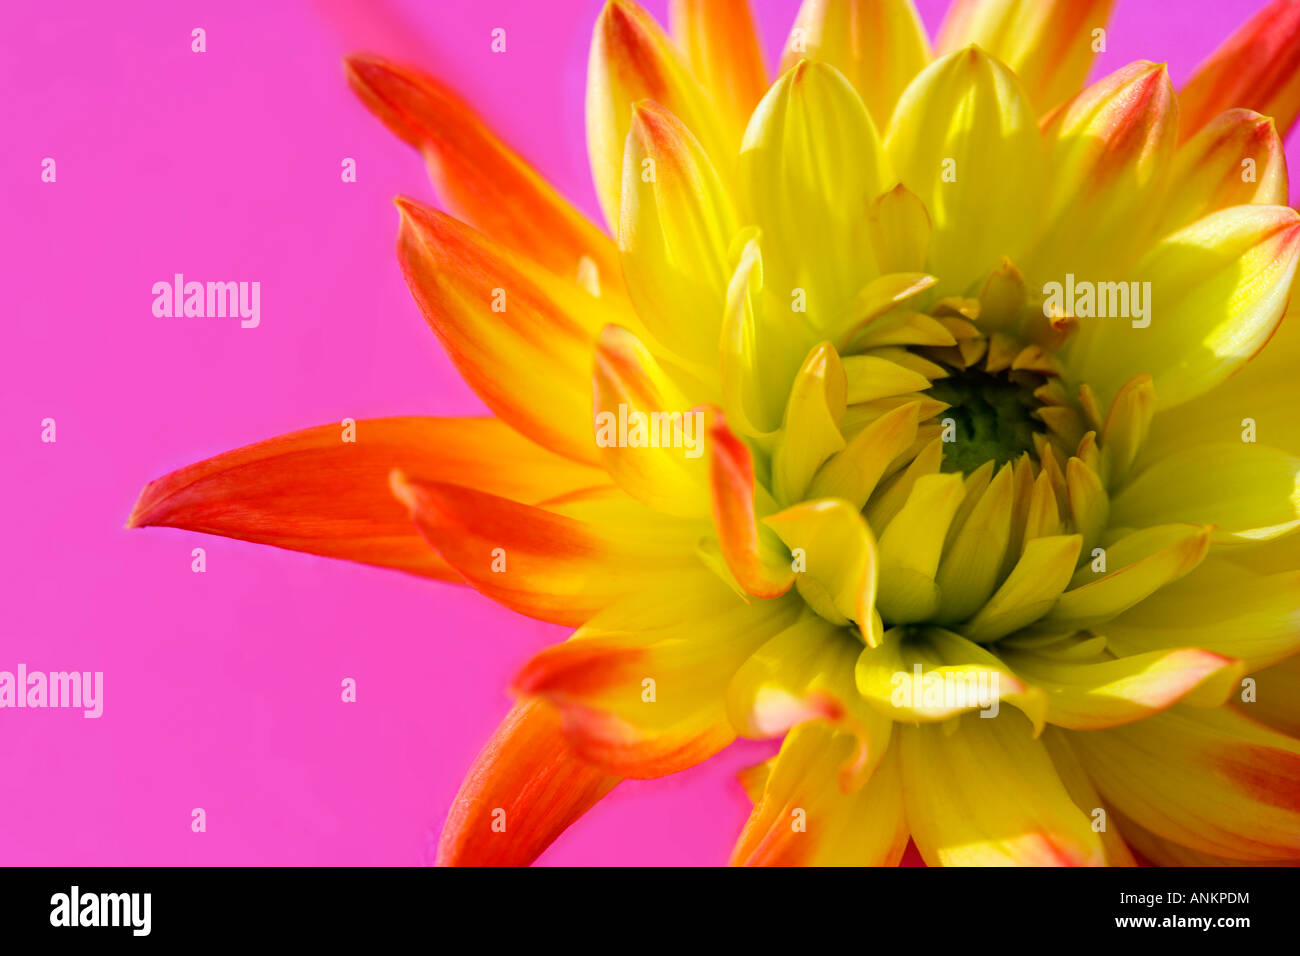 Bi-coloured Dahlia flower shot against a vibrant pink background Stock Photo